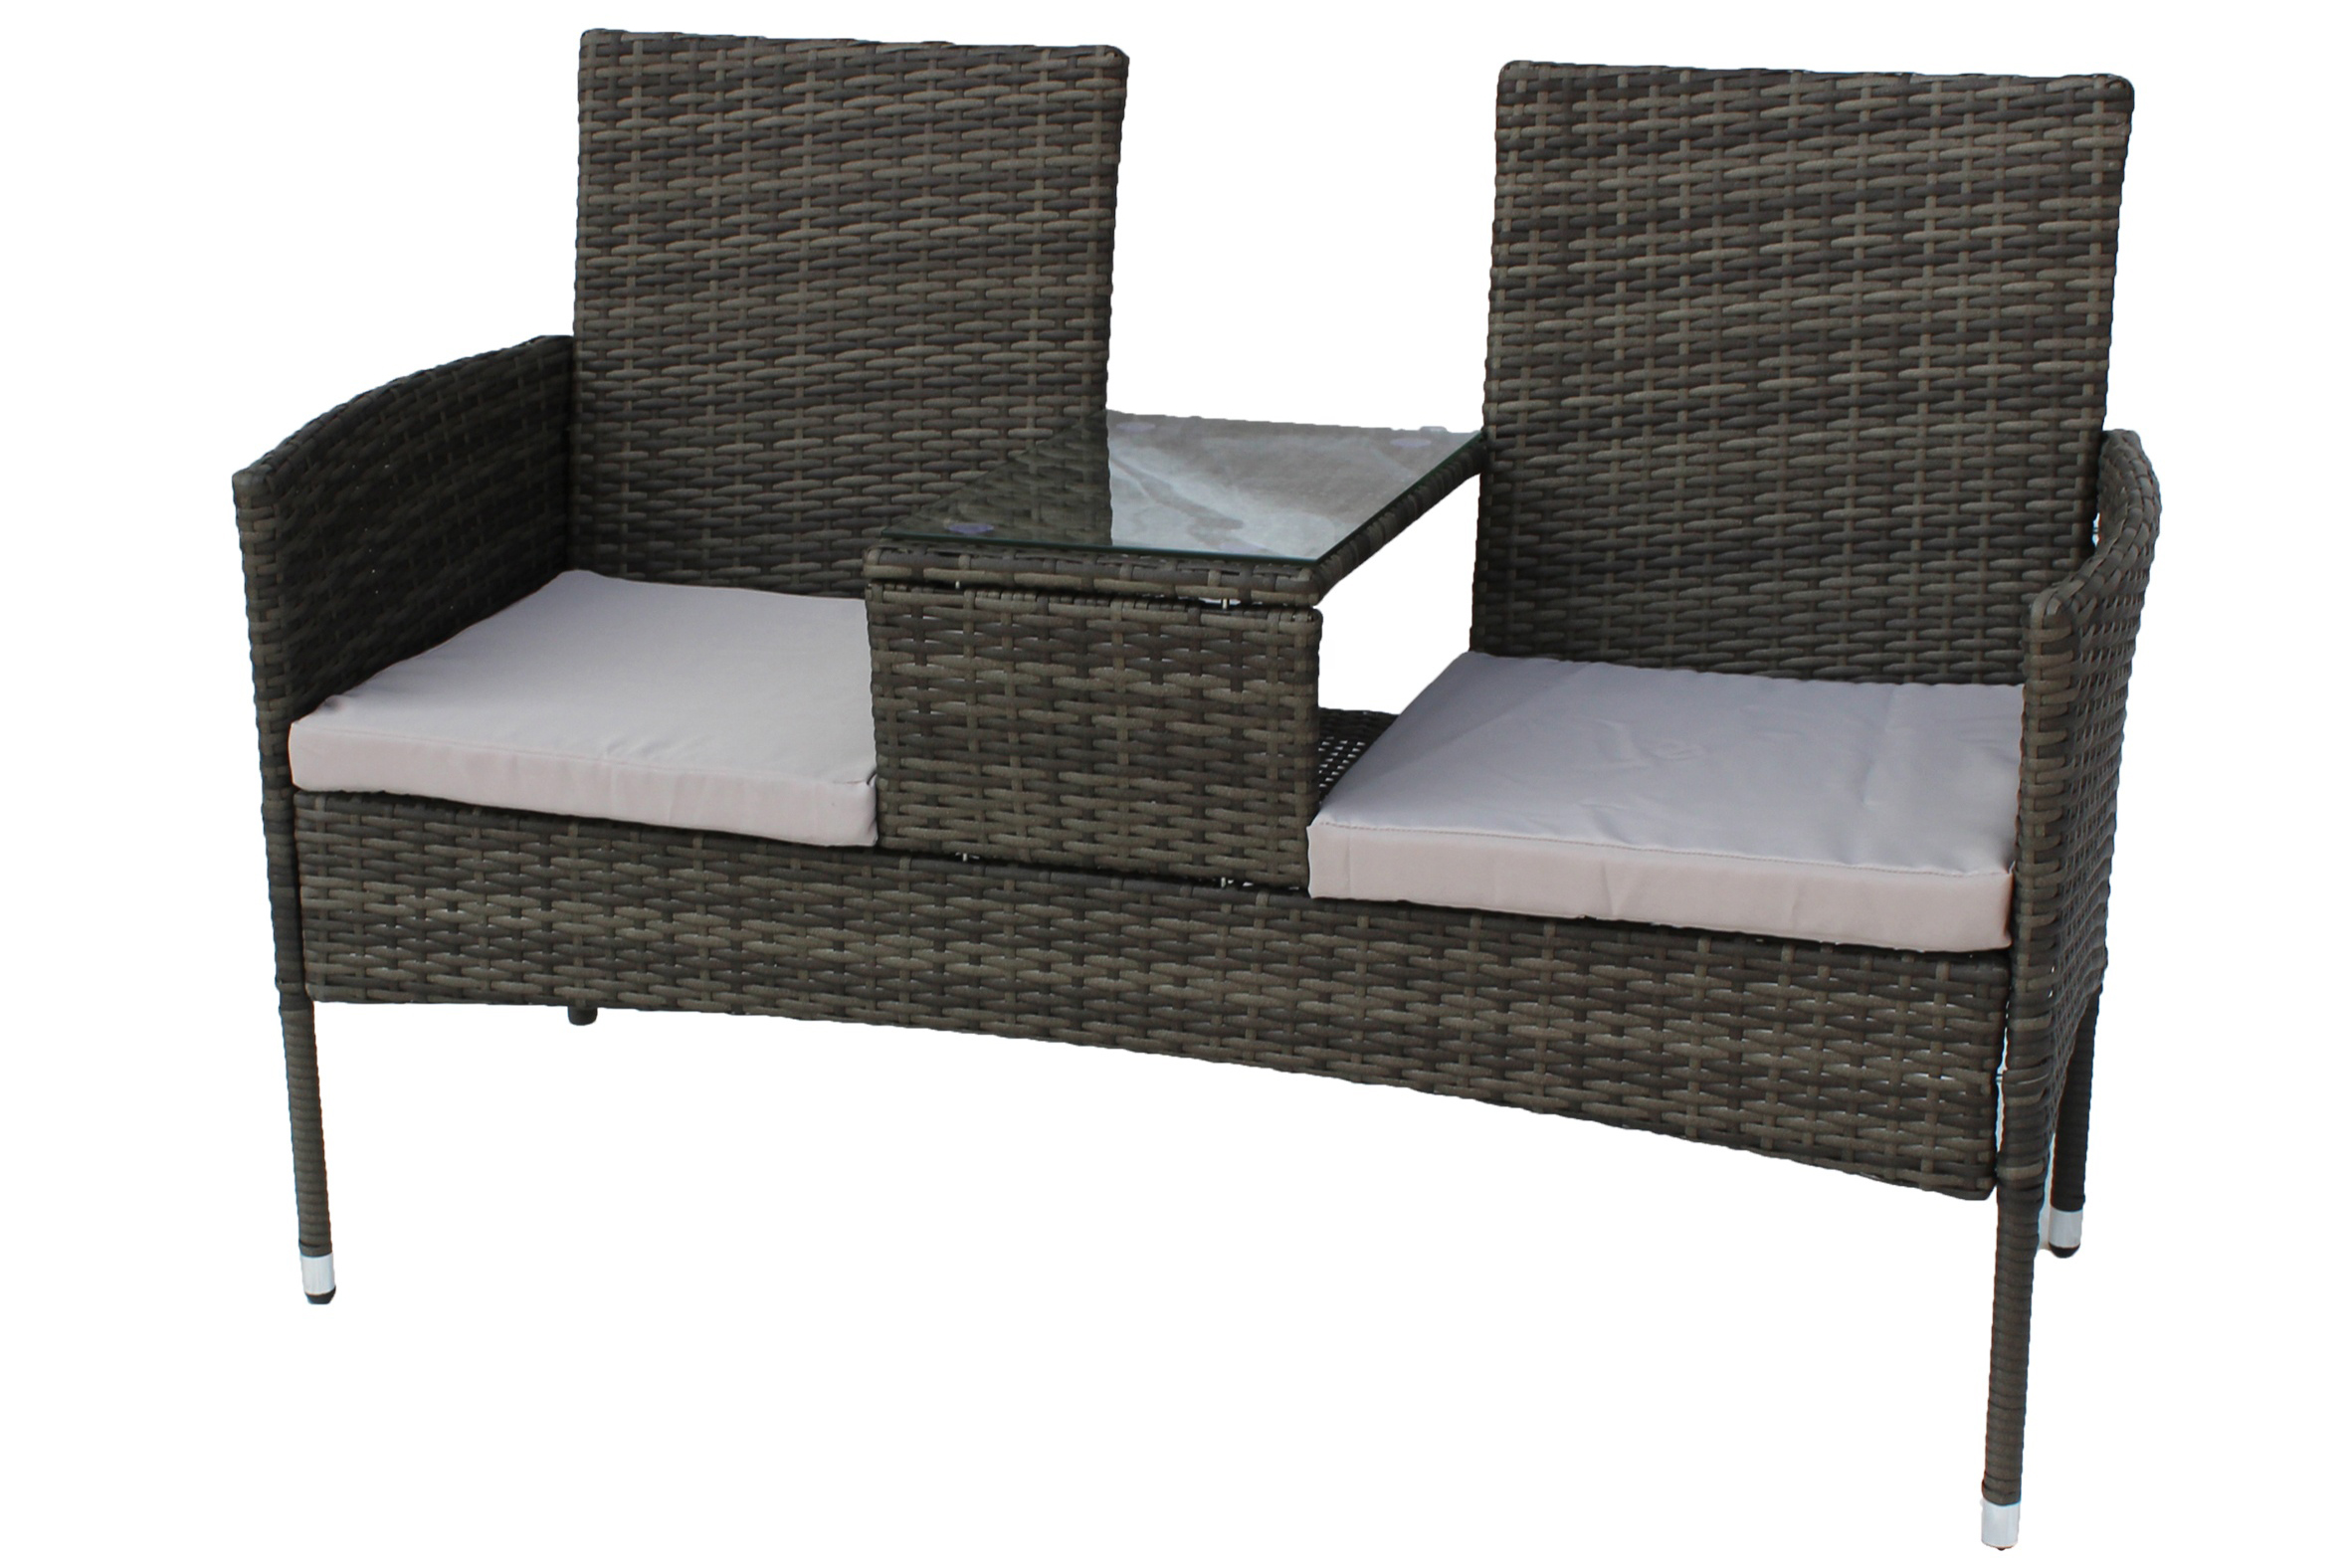 Garden Rattan Set Wicker Furniture Double Seat Sofa With Coffee Table Set